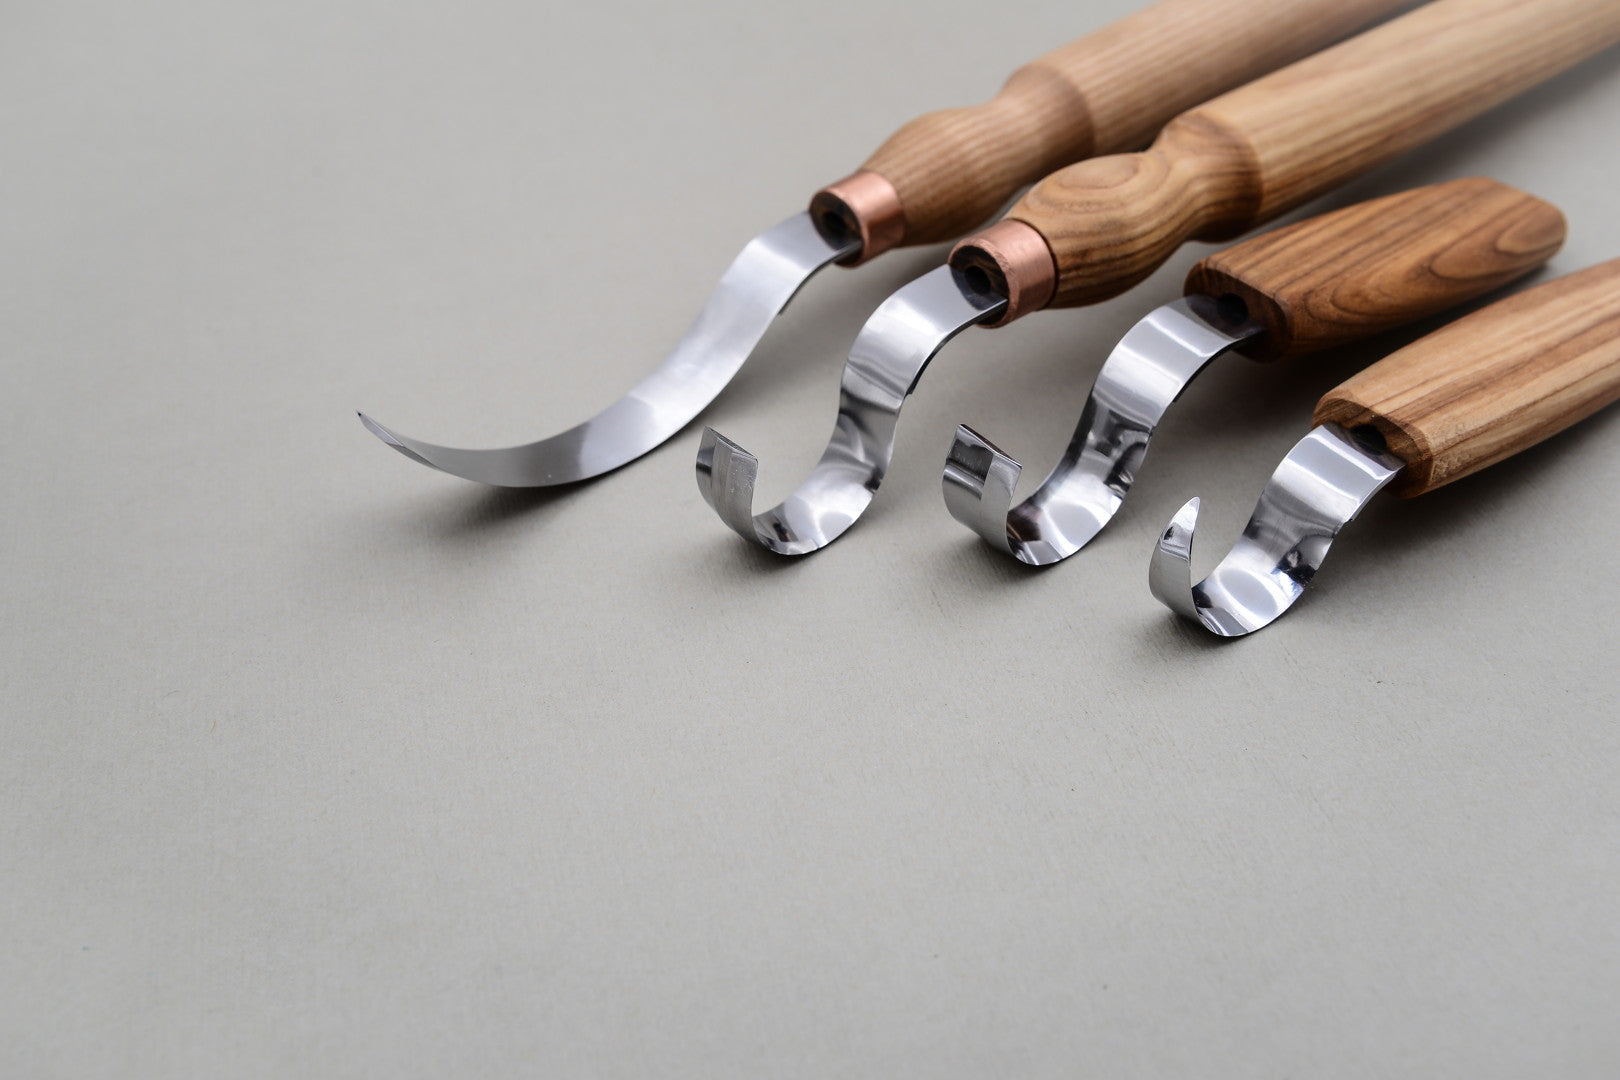 Buy S09L – Set of 4 Knives in Tool Roll (Left handed) online